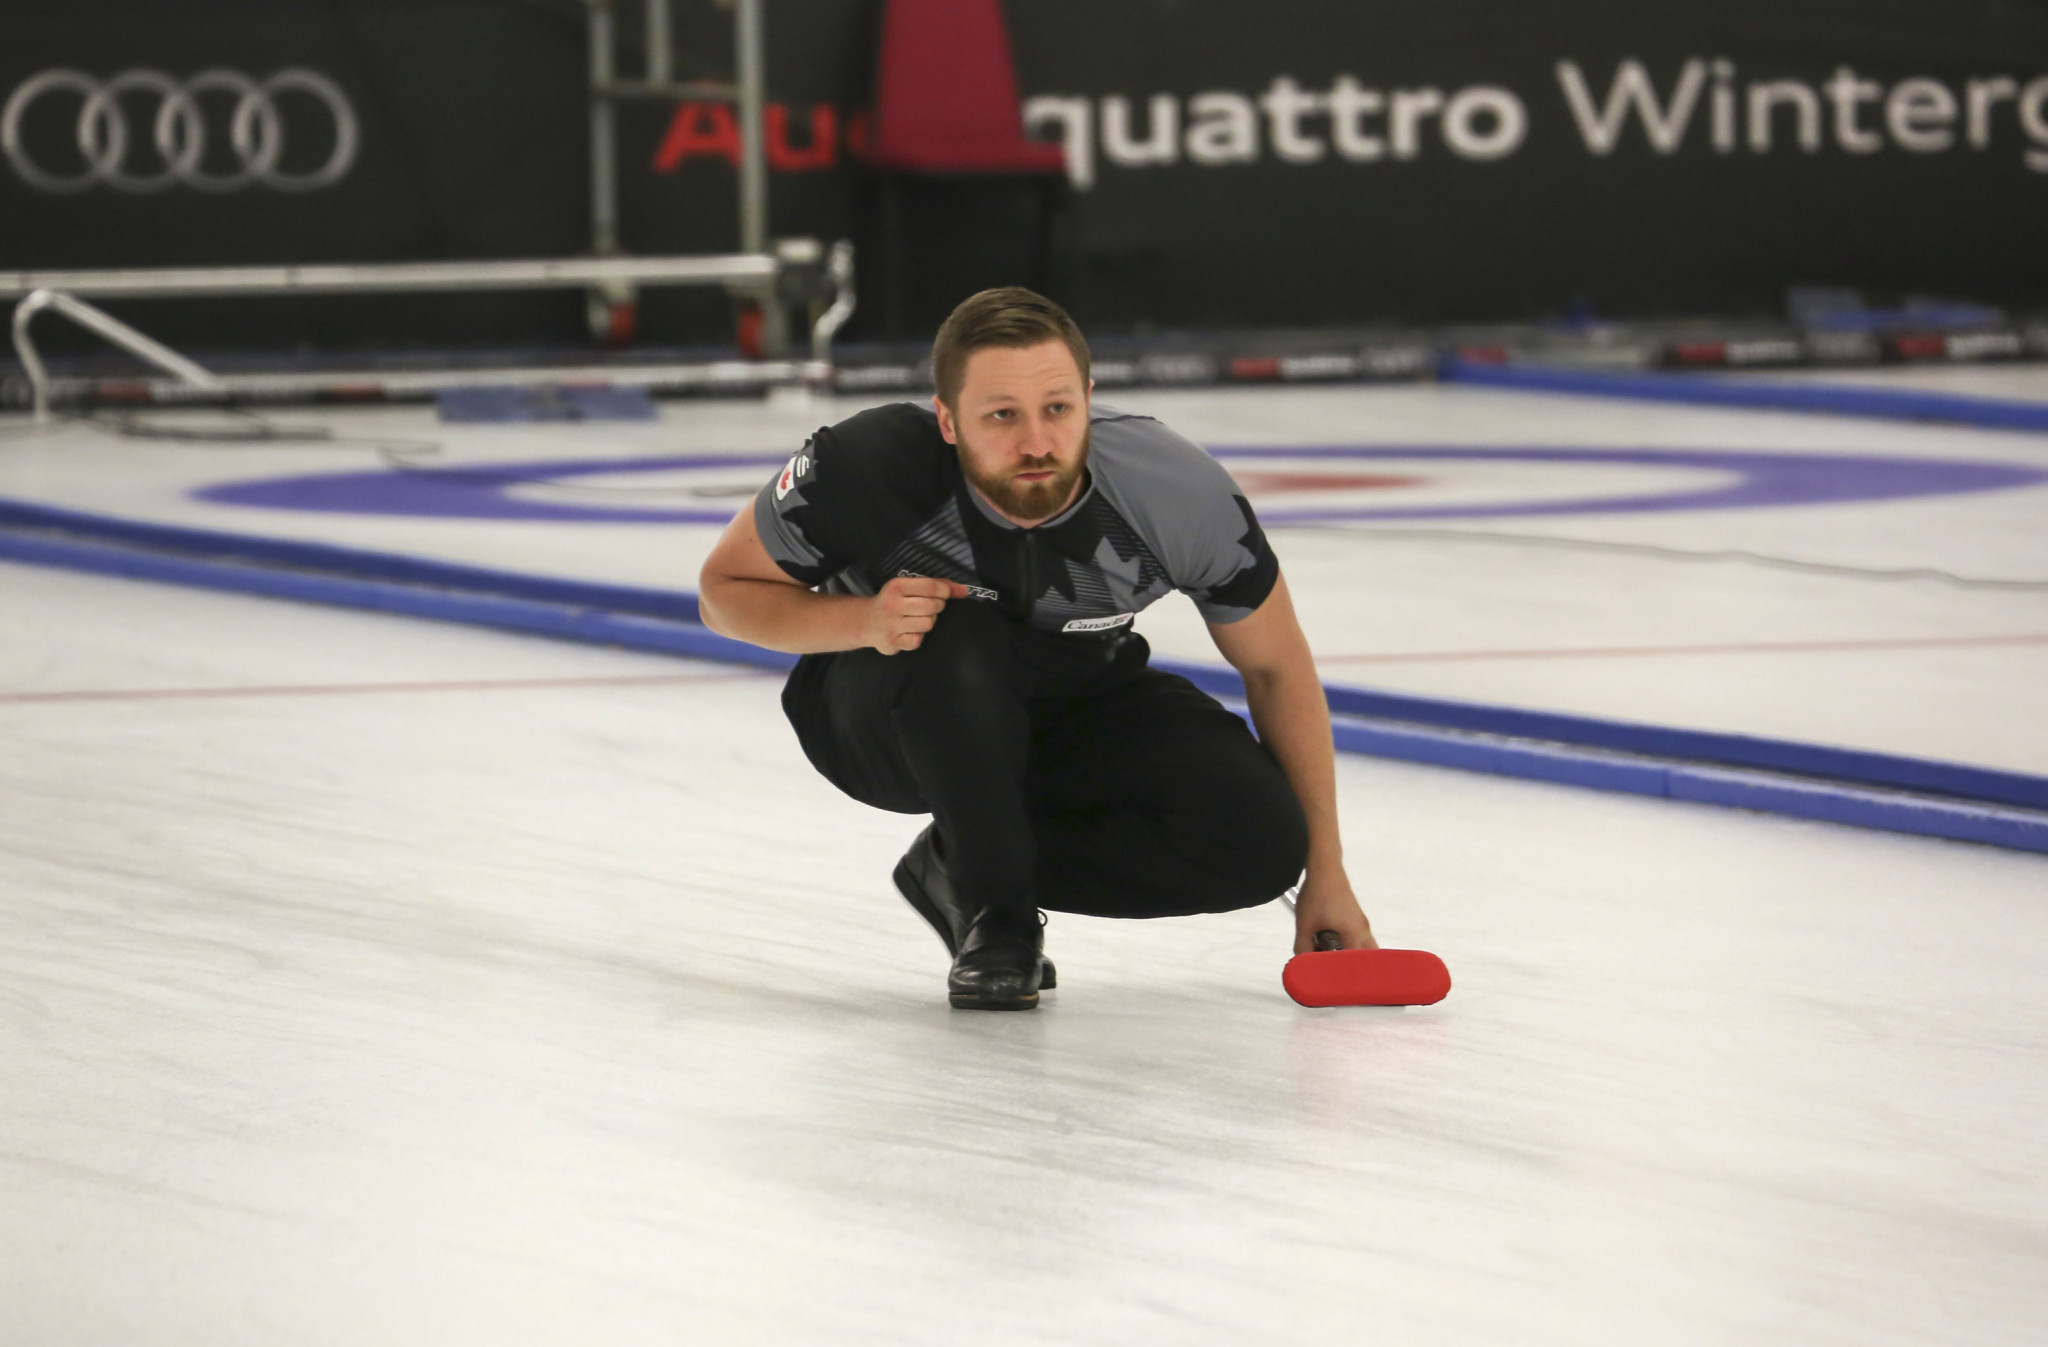 Five teams still unbeaten at World Curling Championship qualification event